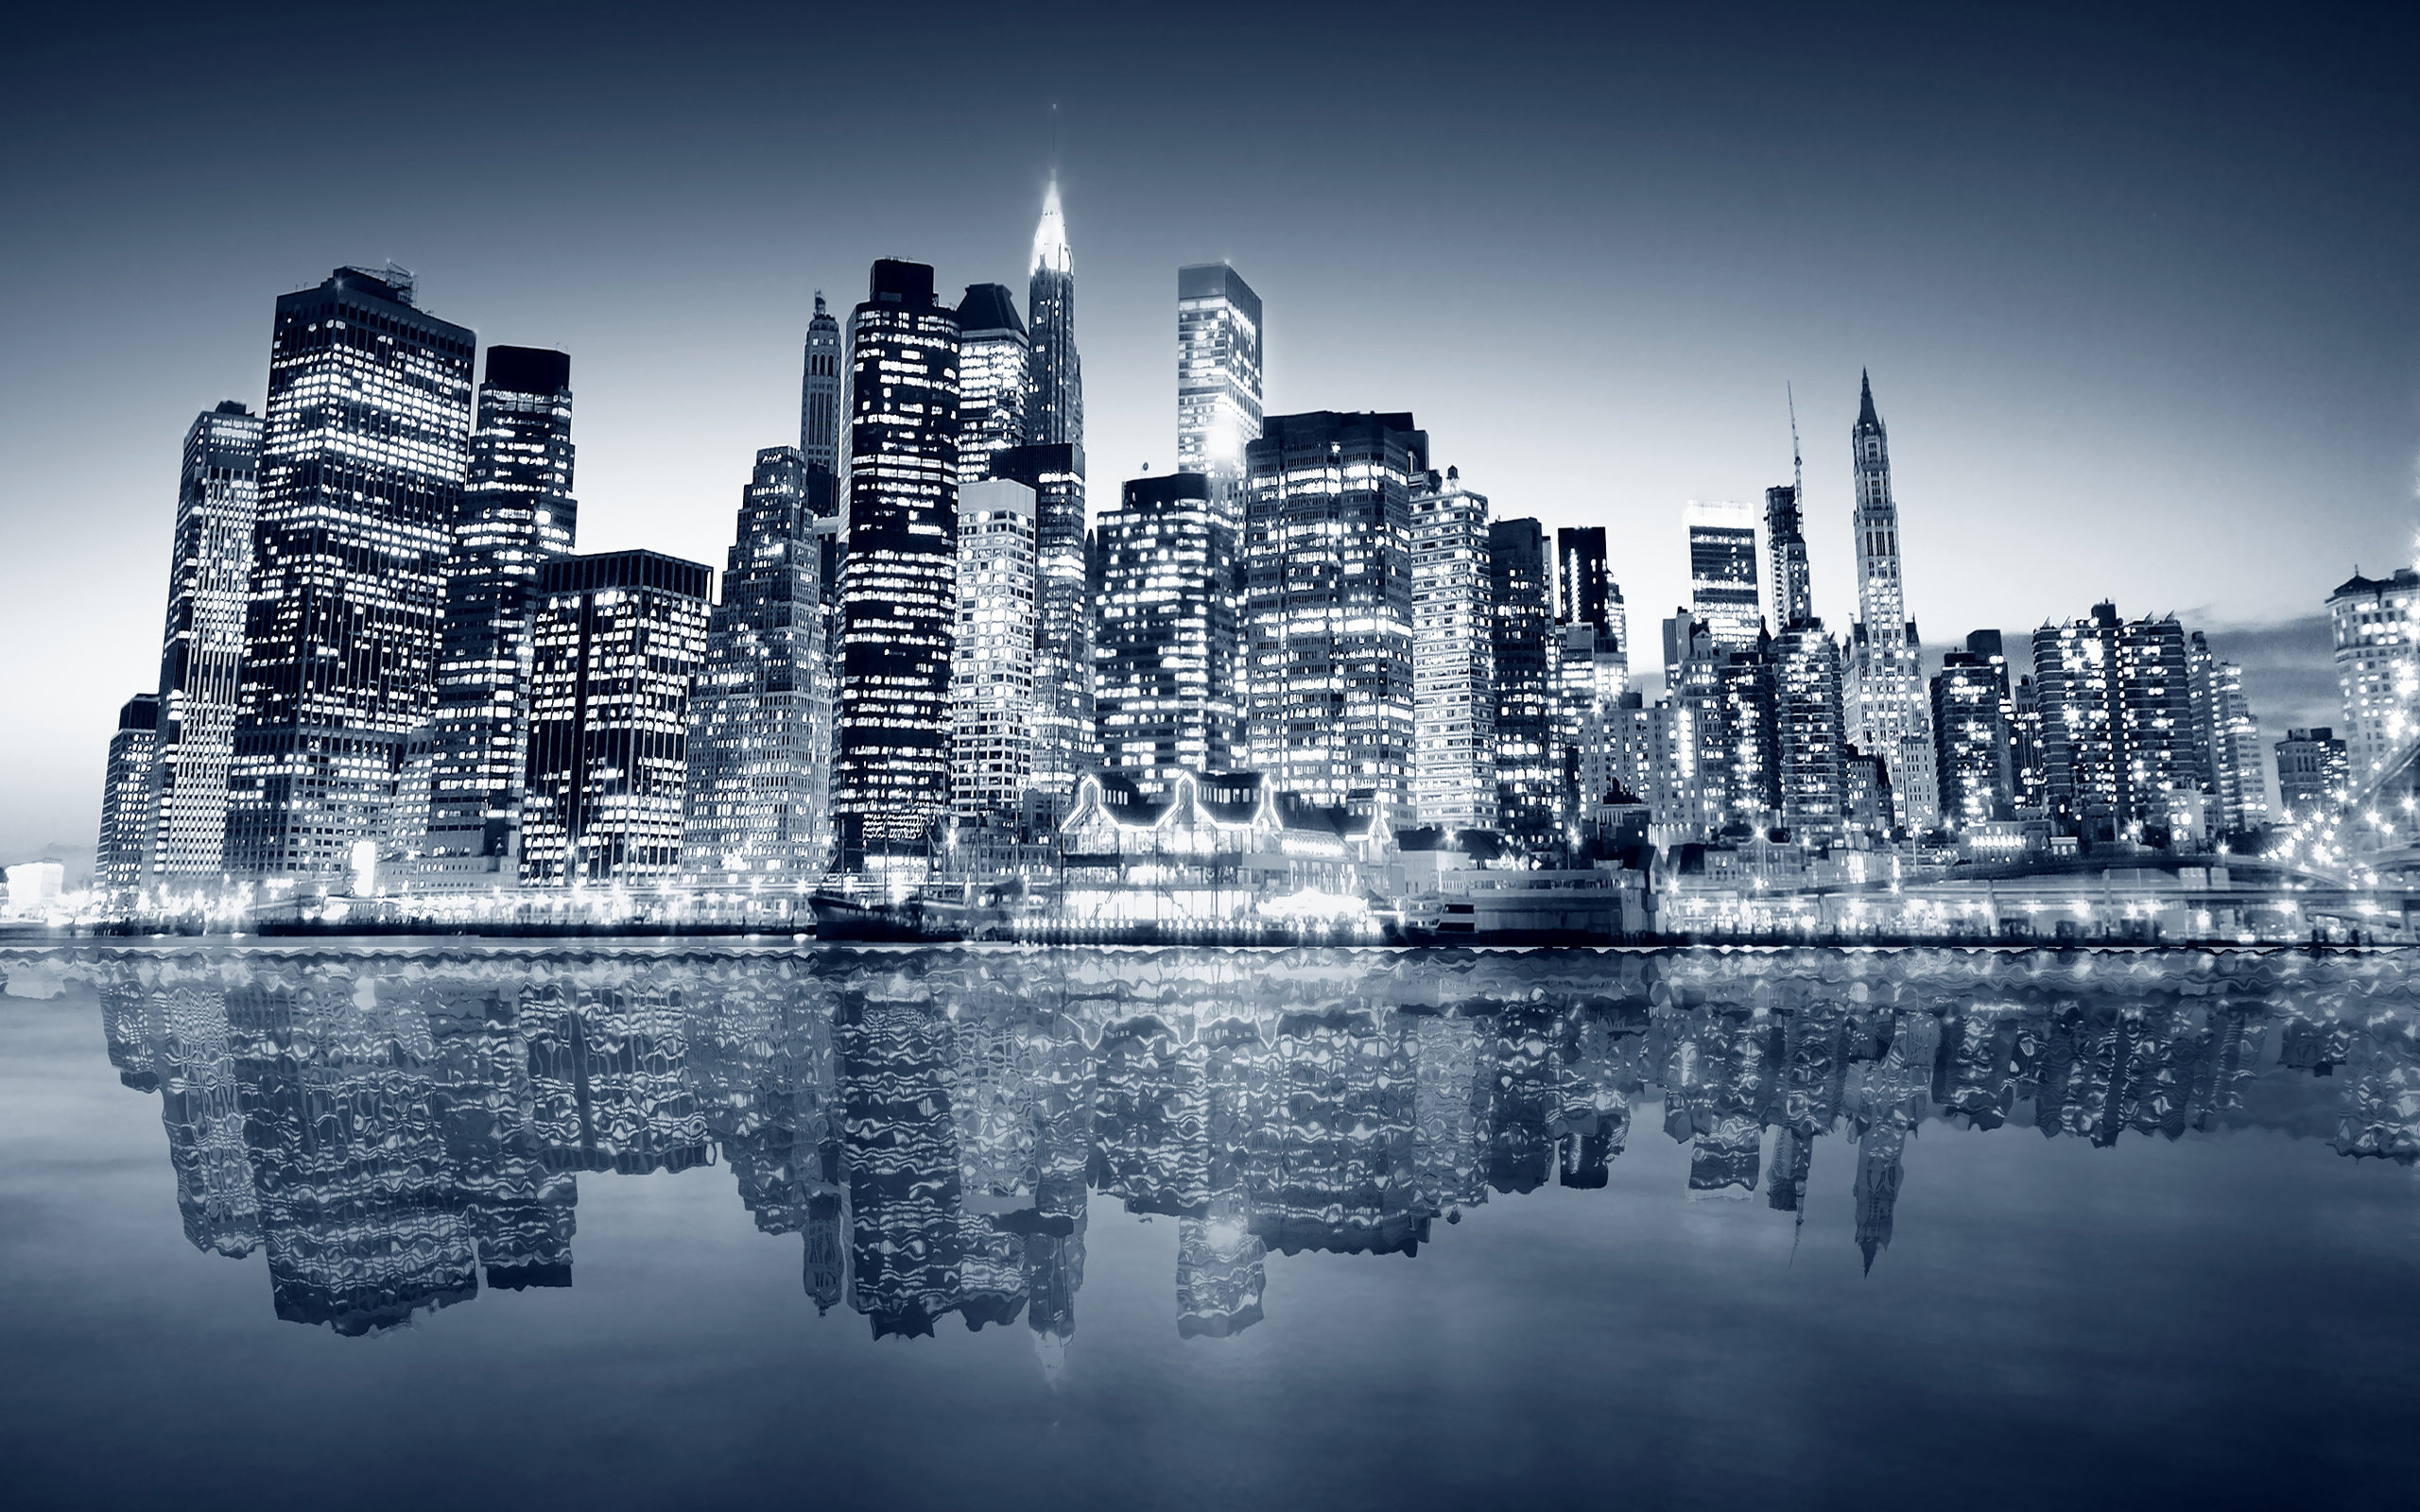 And new york city skyline wallpaper bridge city night pictures ...